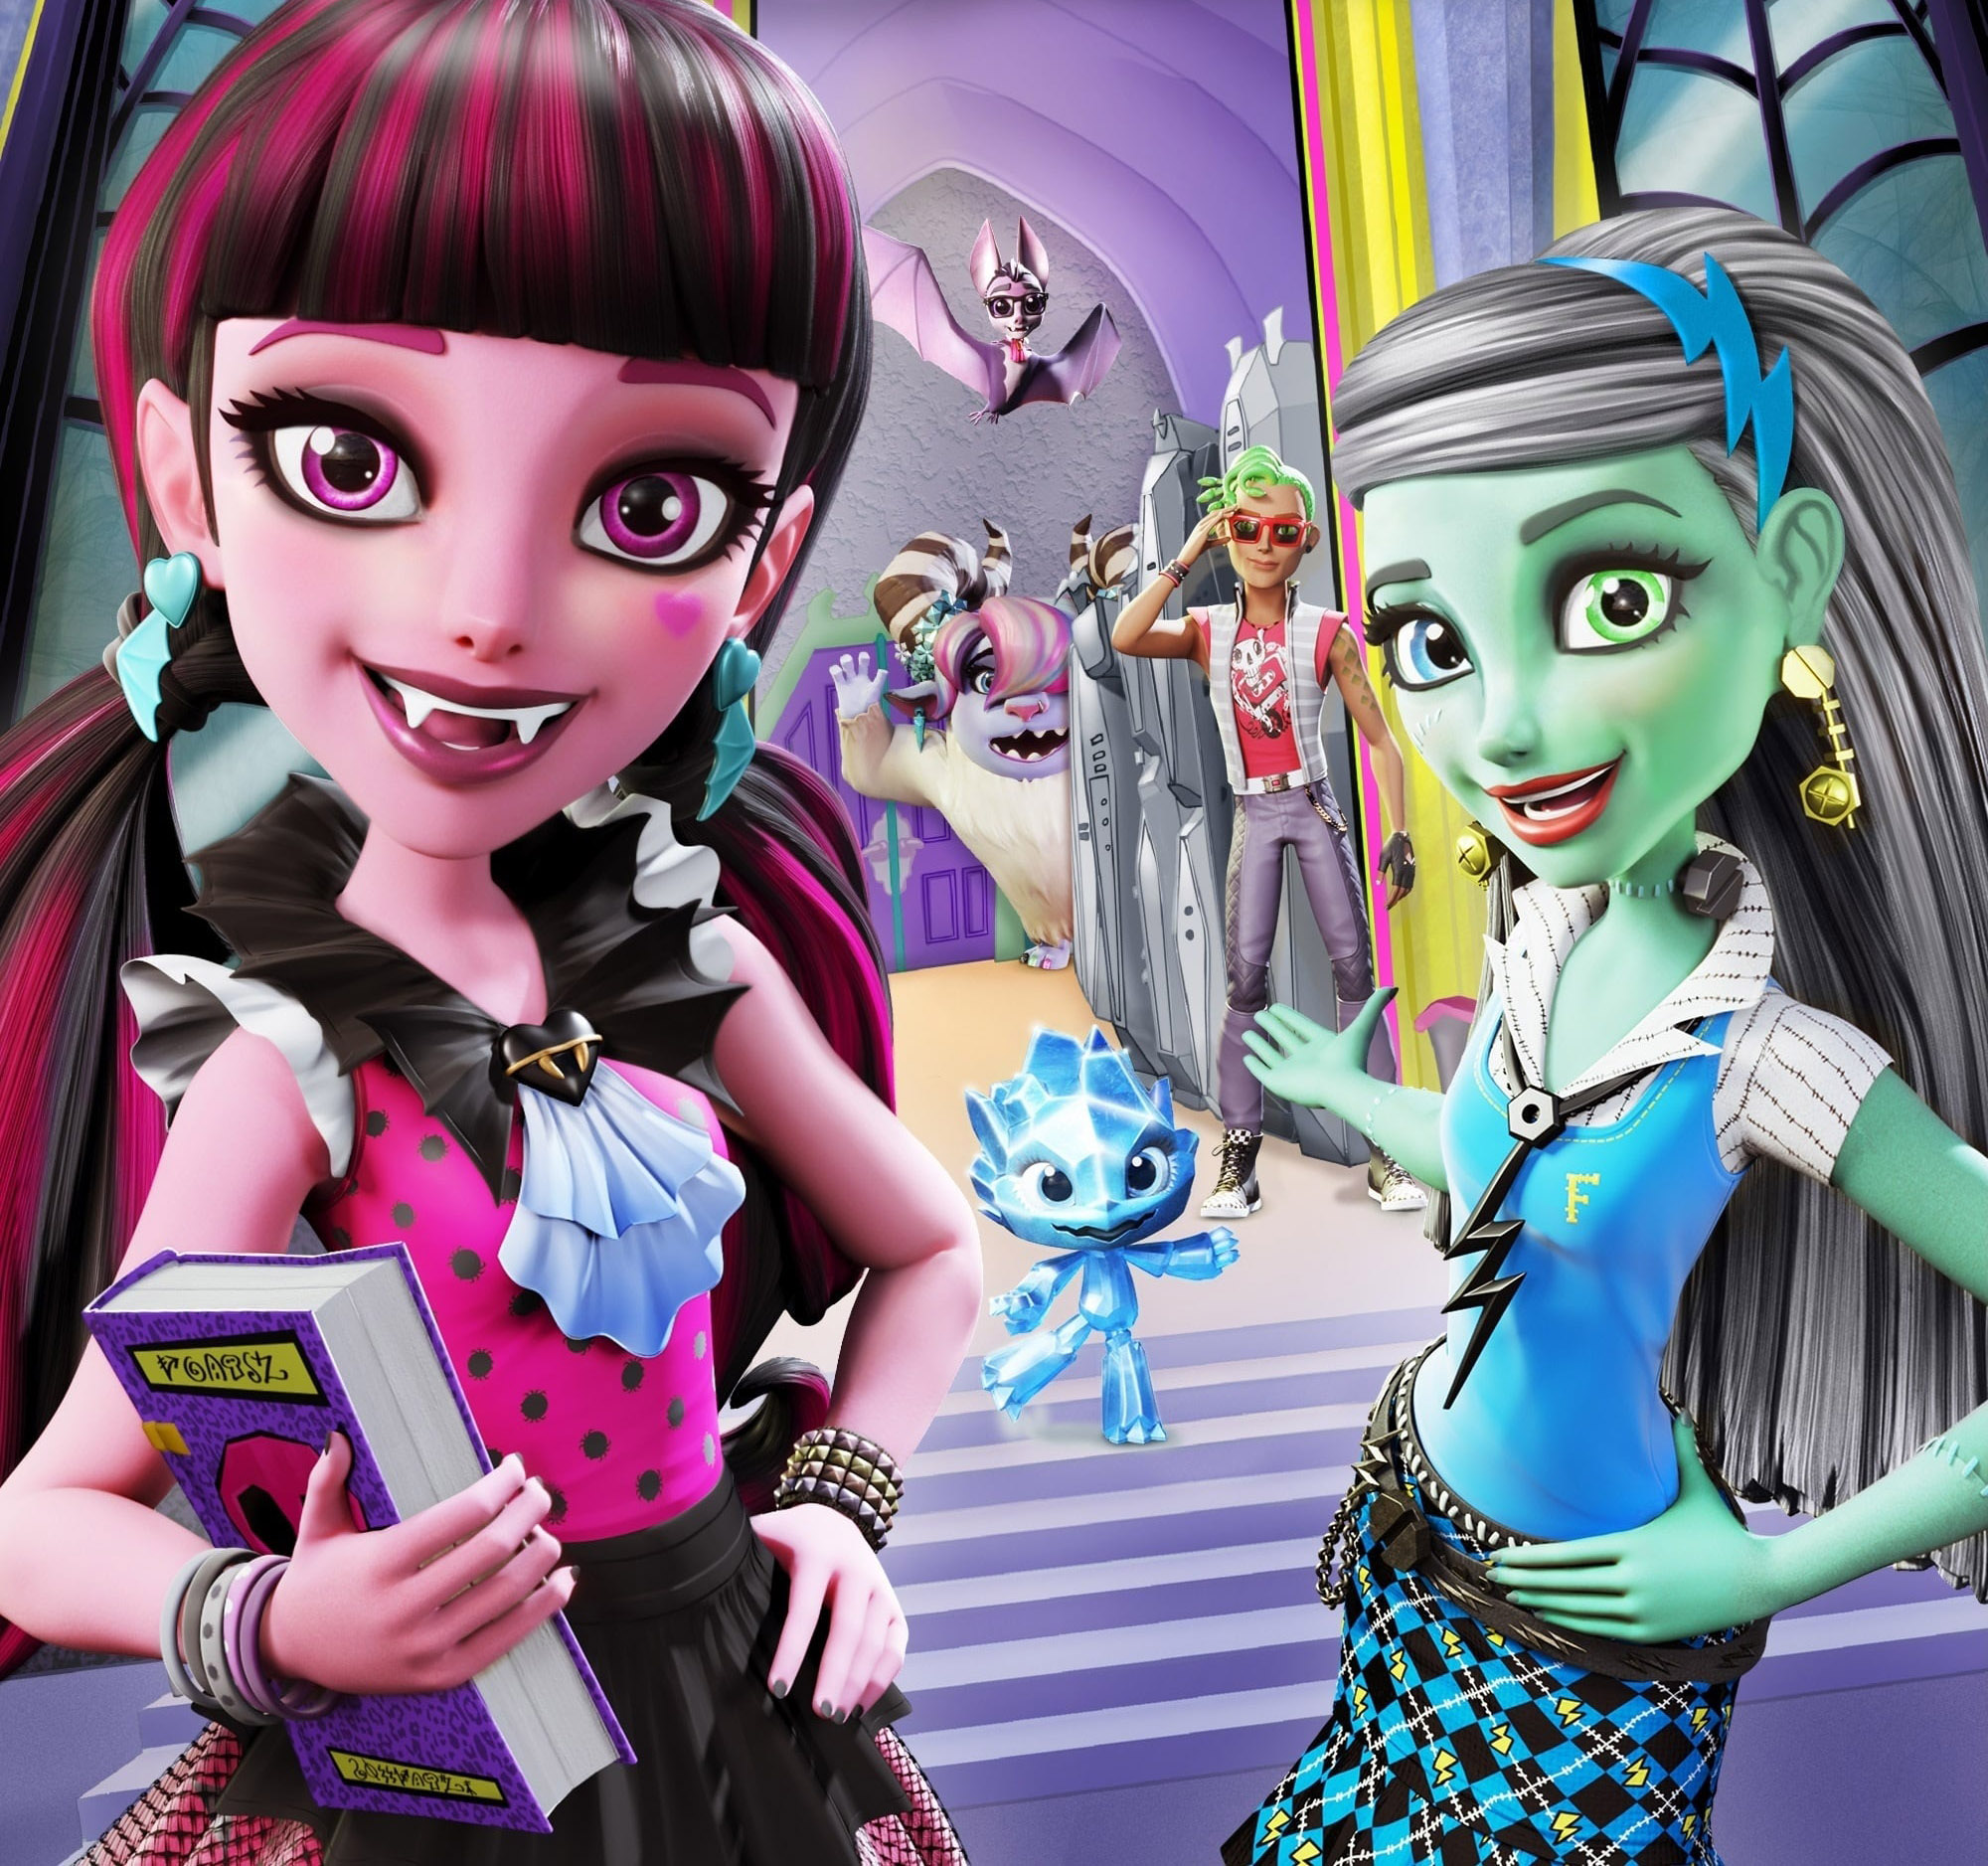 Monster High Boneca Dança Dos Monstros Draculaura - Mattel